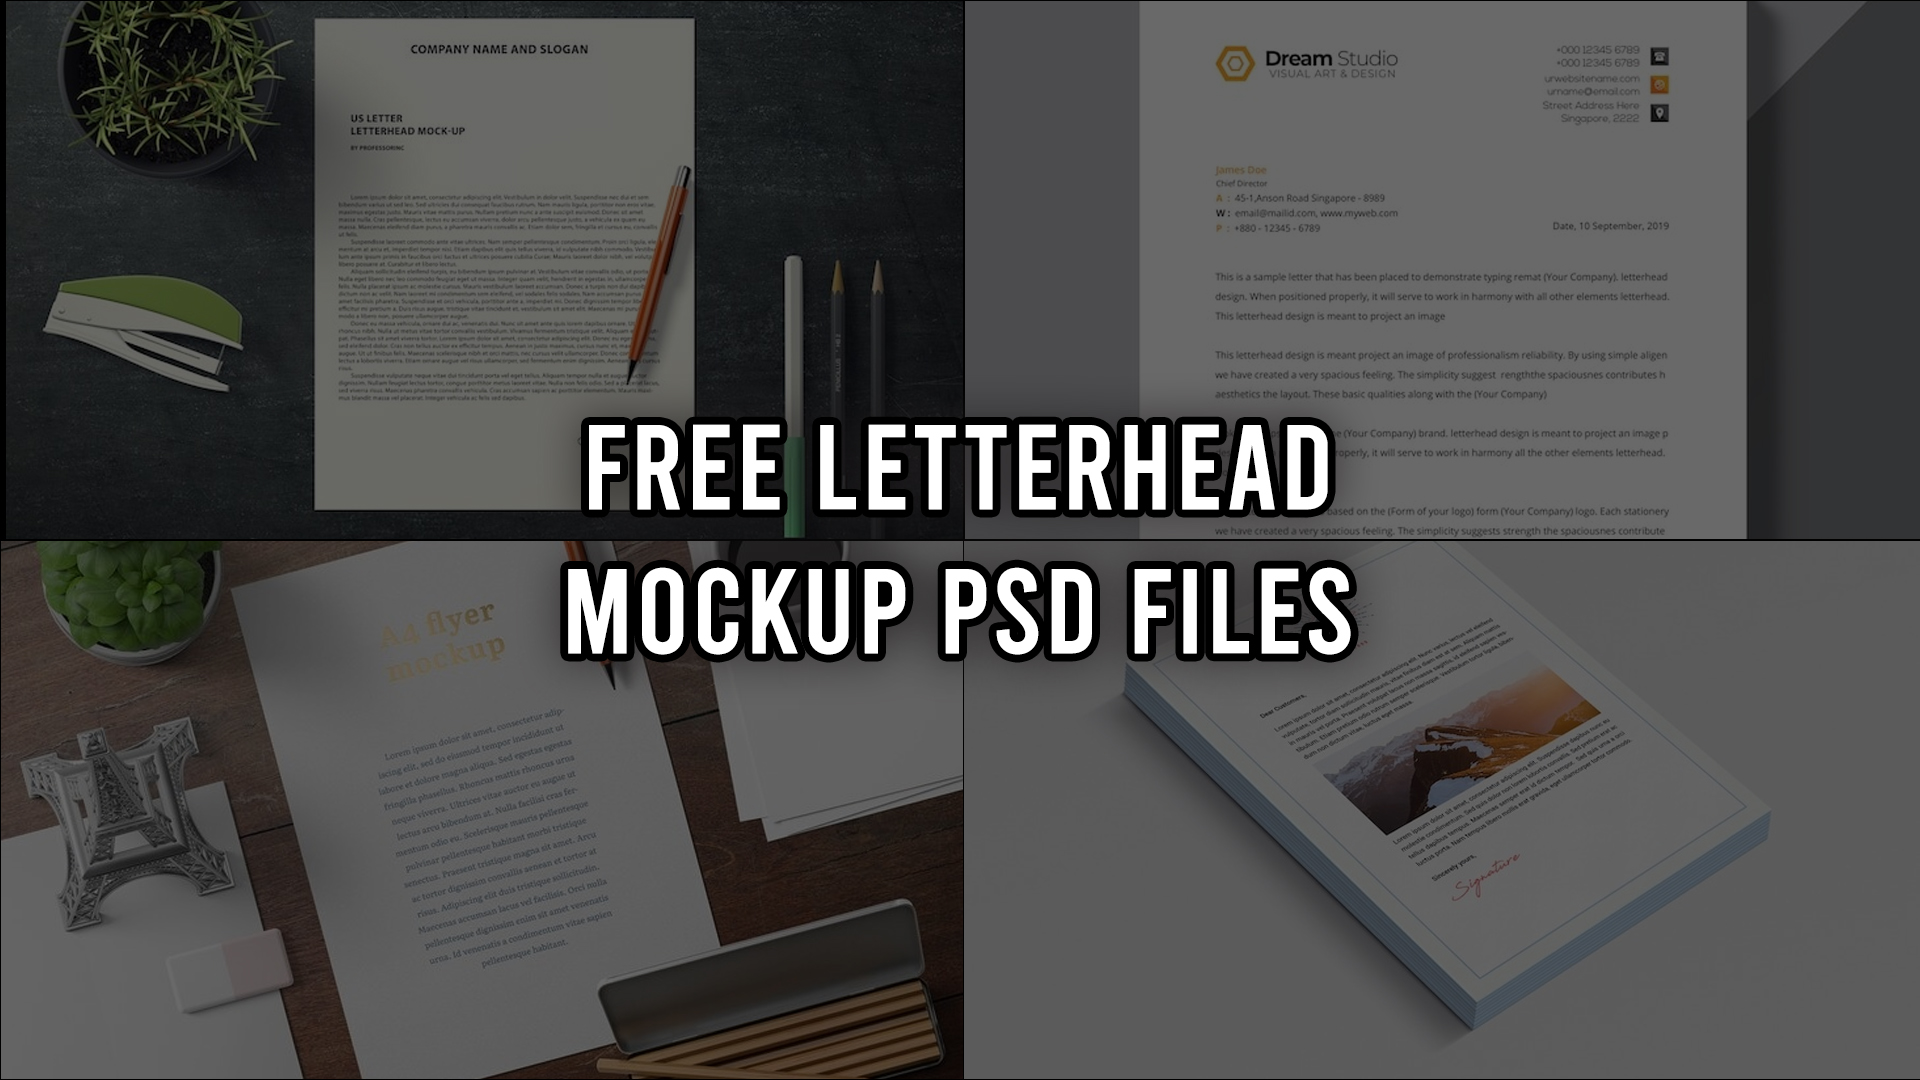 Free Letterhead Mockup PSD Files